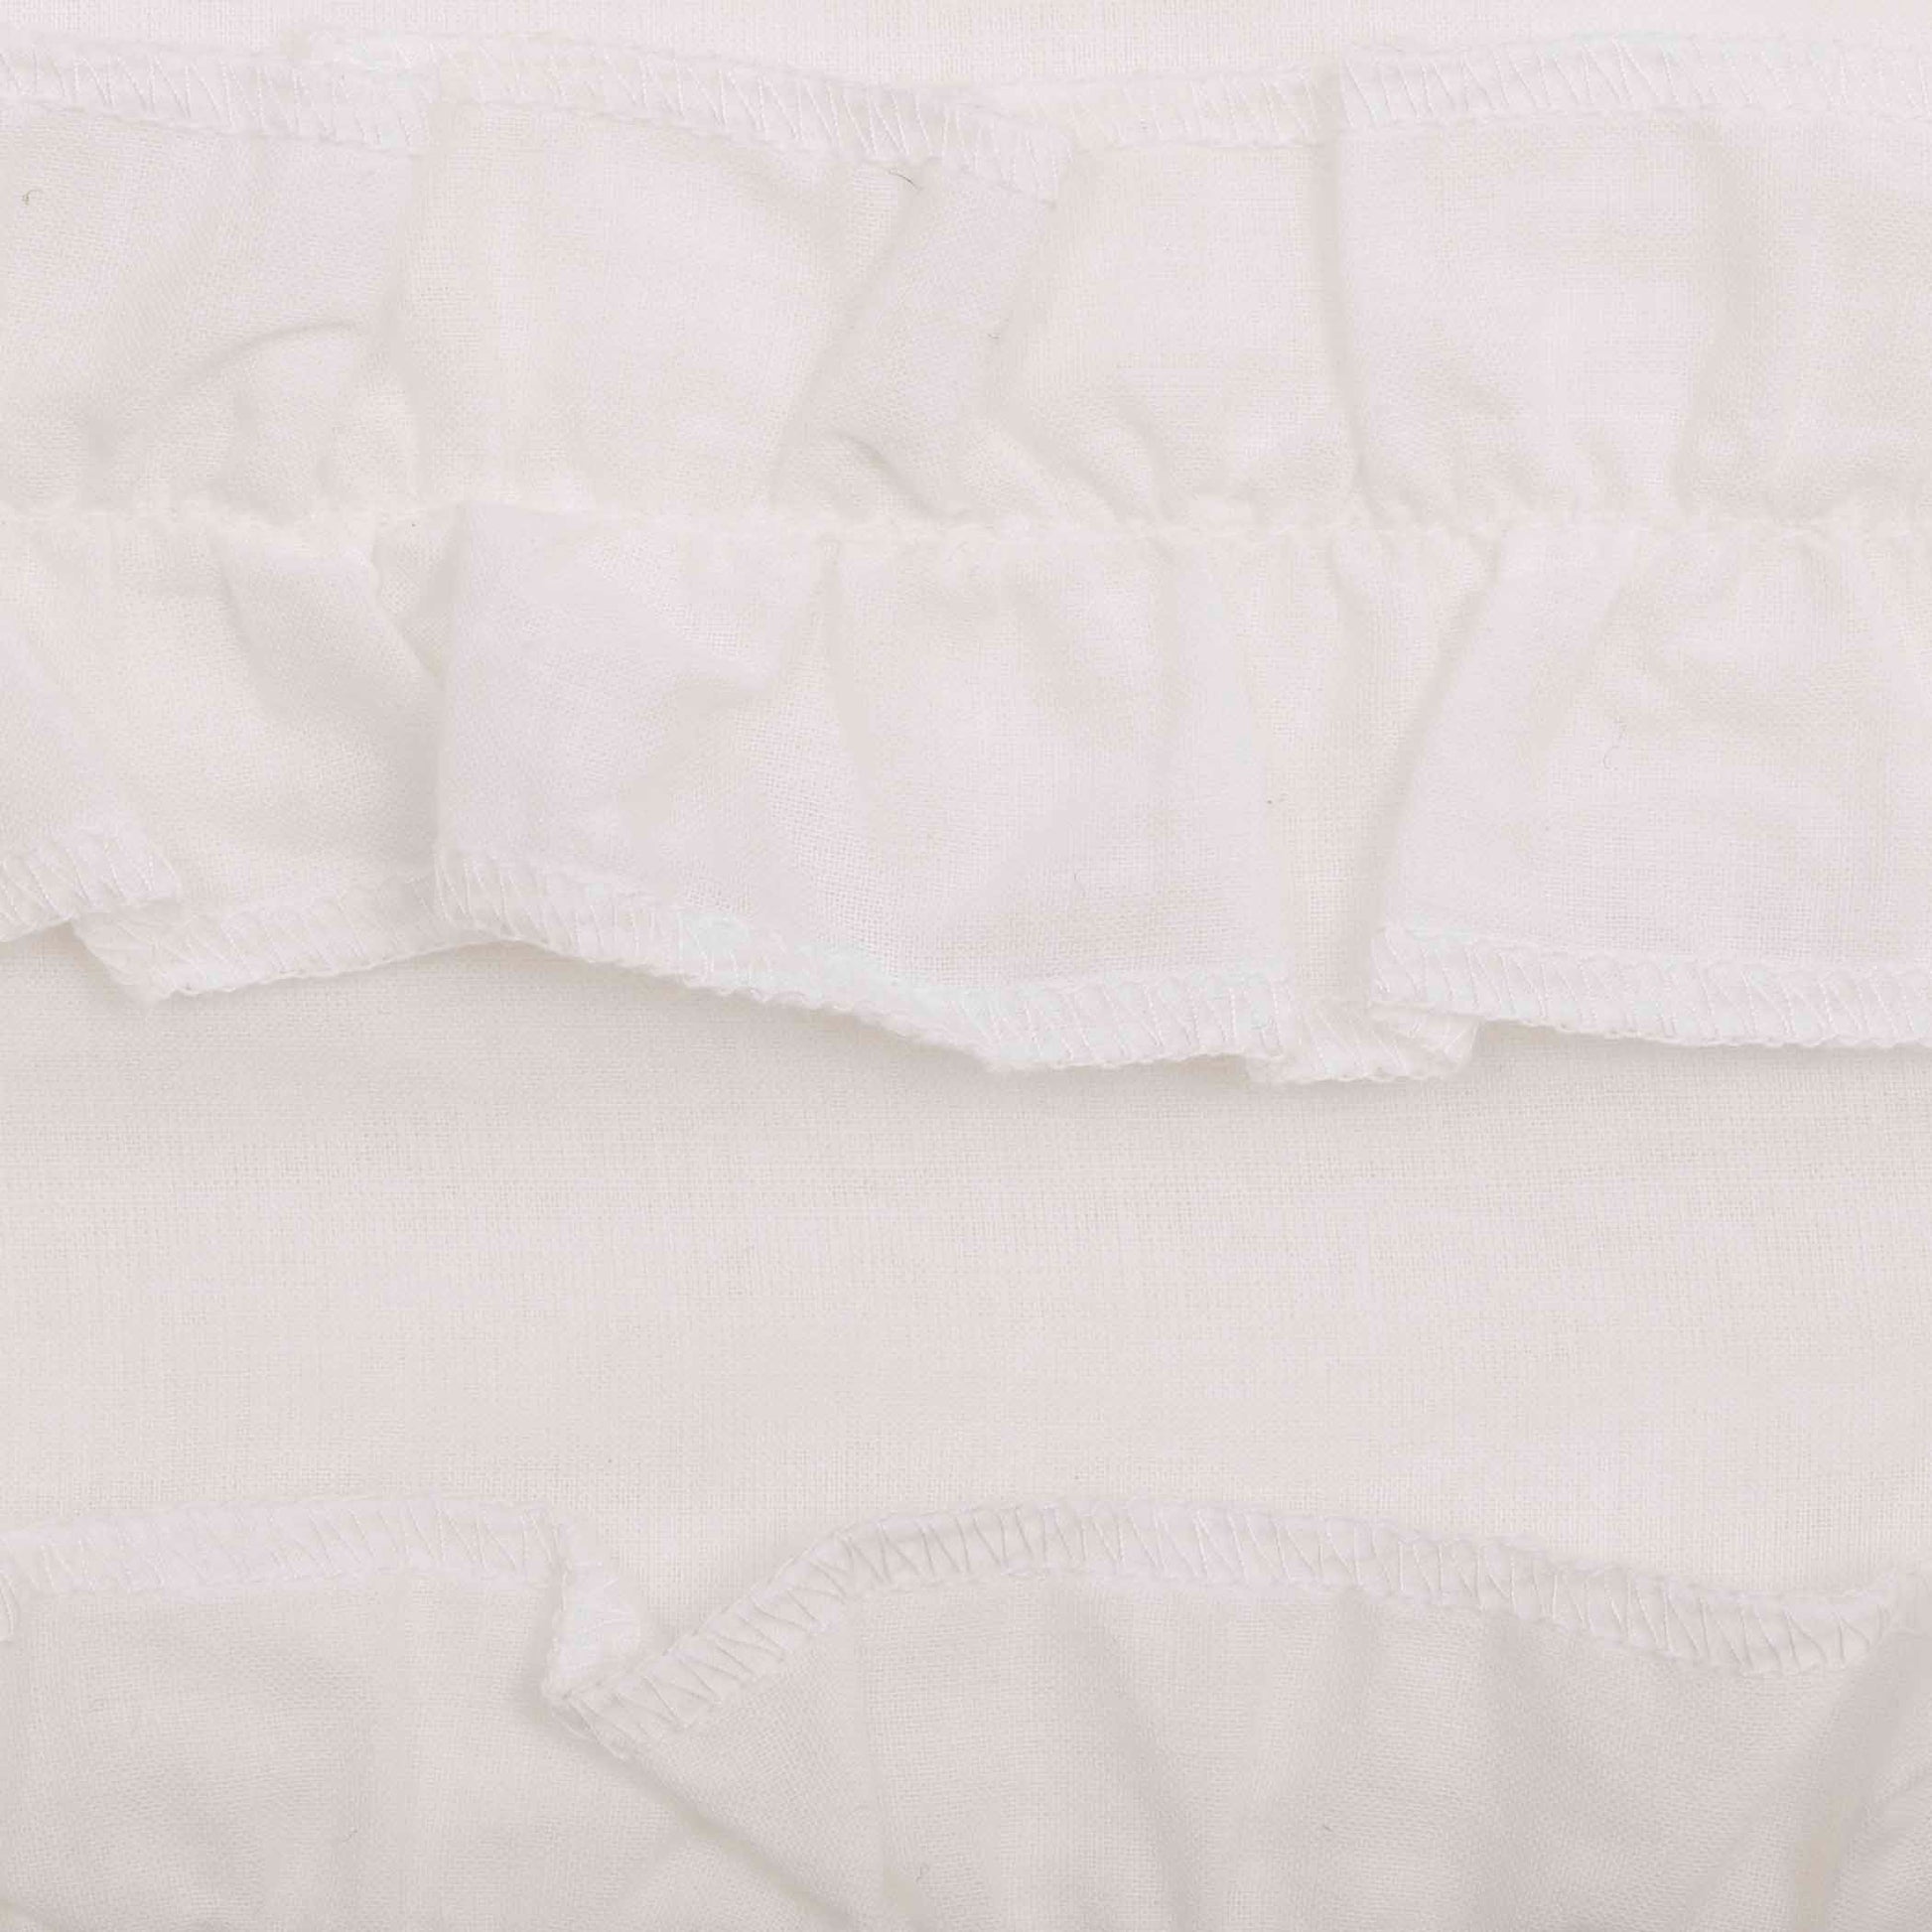 51399-White-Ruffled-Sheer-Petticoat-Panel-Set-of-2-84x40-image-8